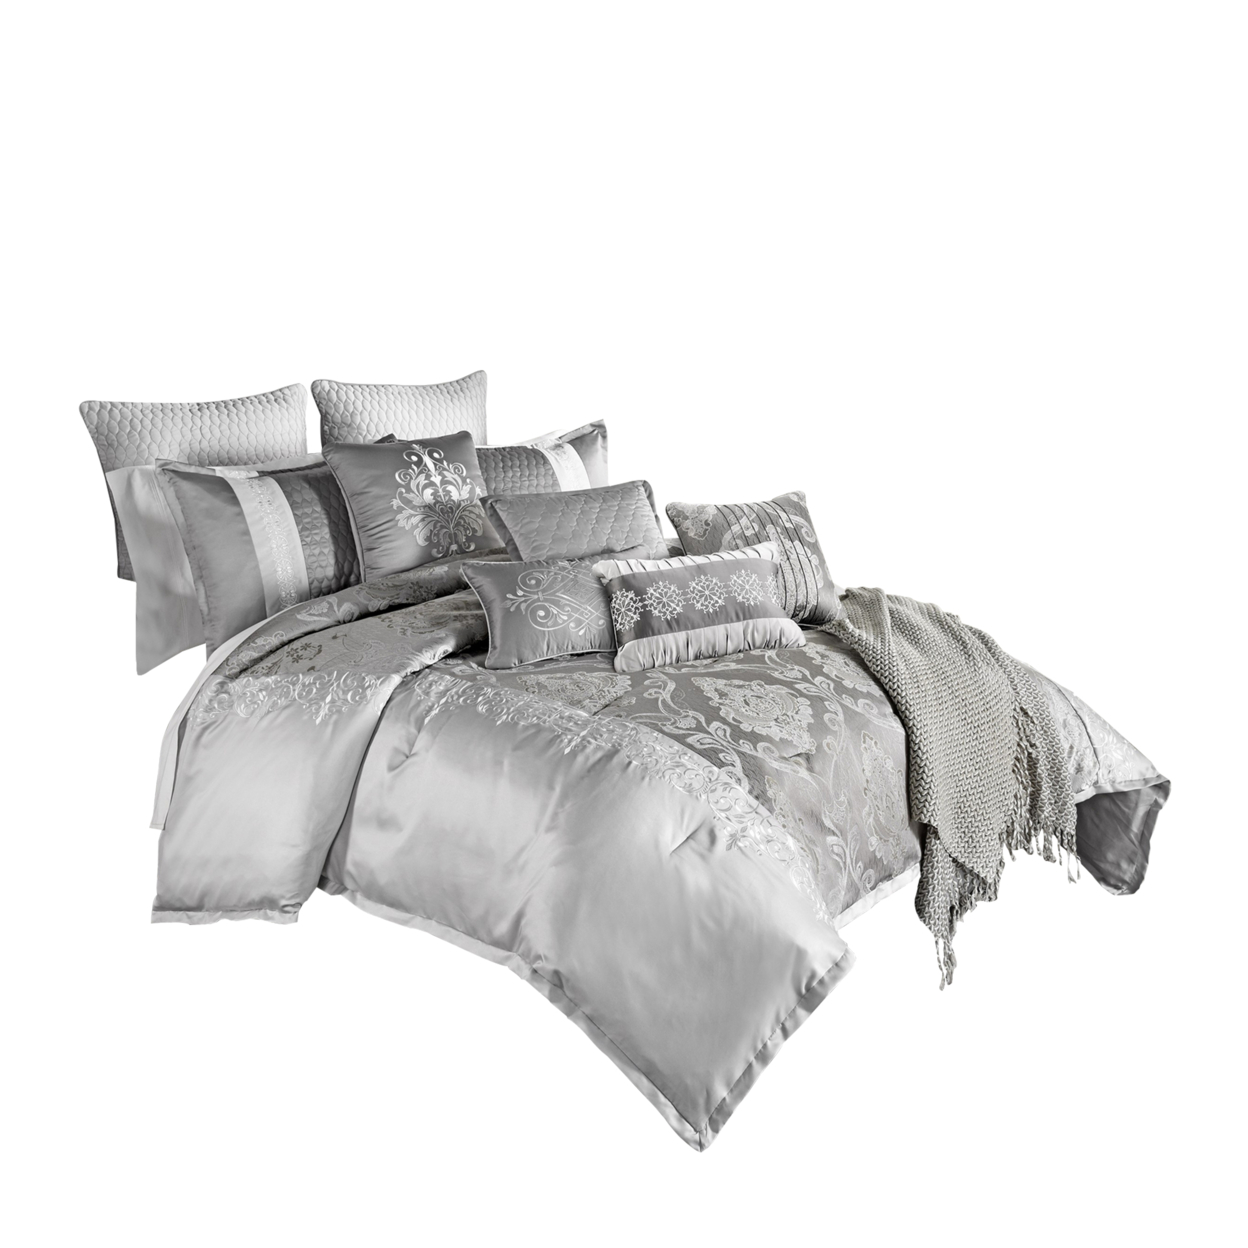 12 Piece Queen Polyester Comforter Set With Medallion Print, Platinum Gray- Saltoro Sherpi